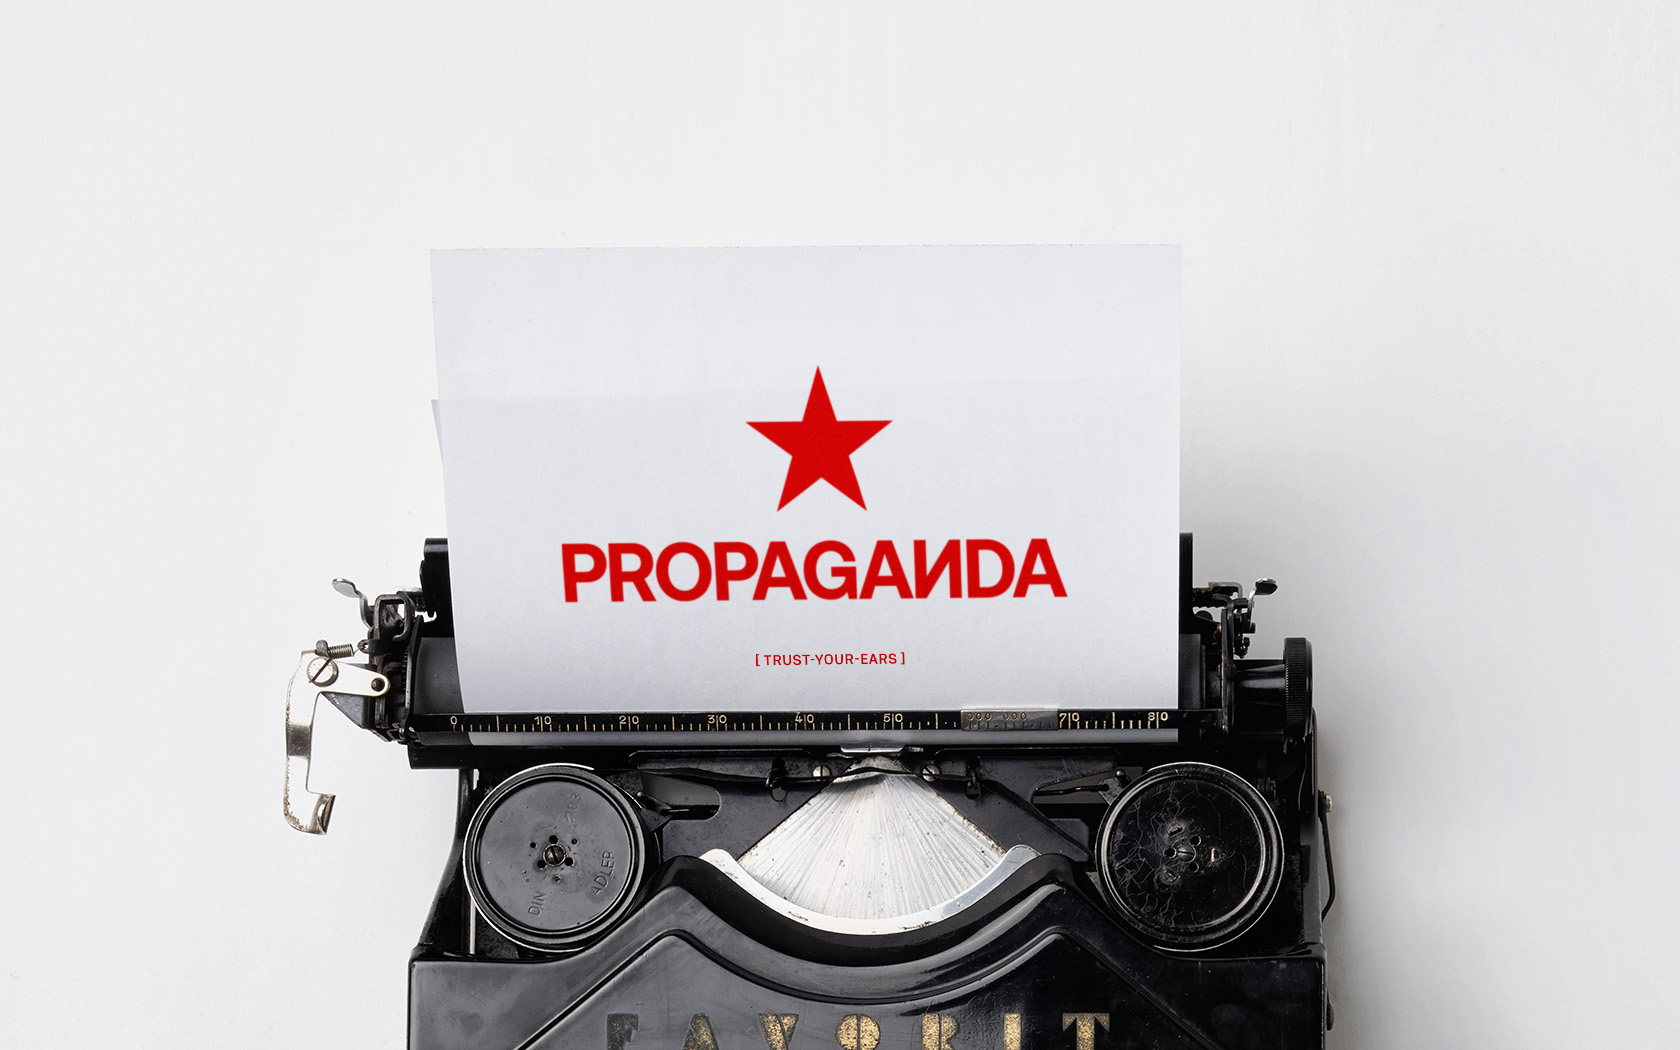 Propaganda. Brand logo in red